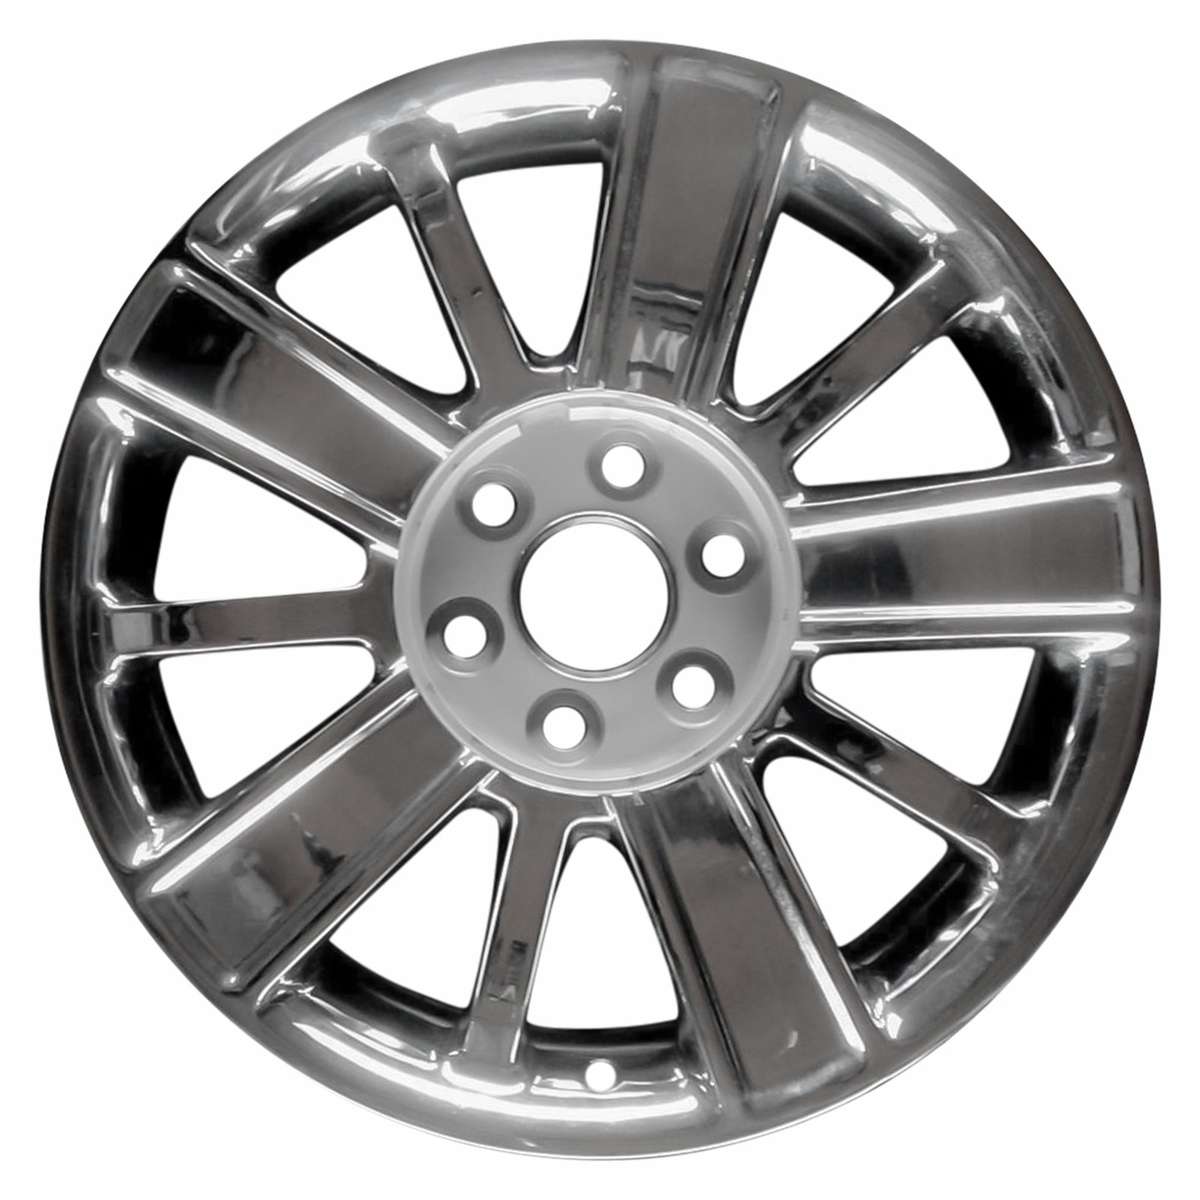 2014 Chevrolet Silverado 1500 New 20" Replacement Wheel Rim RW5653CHR